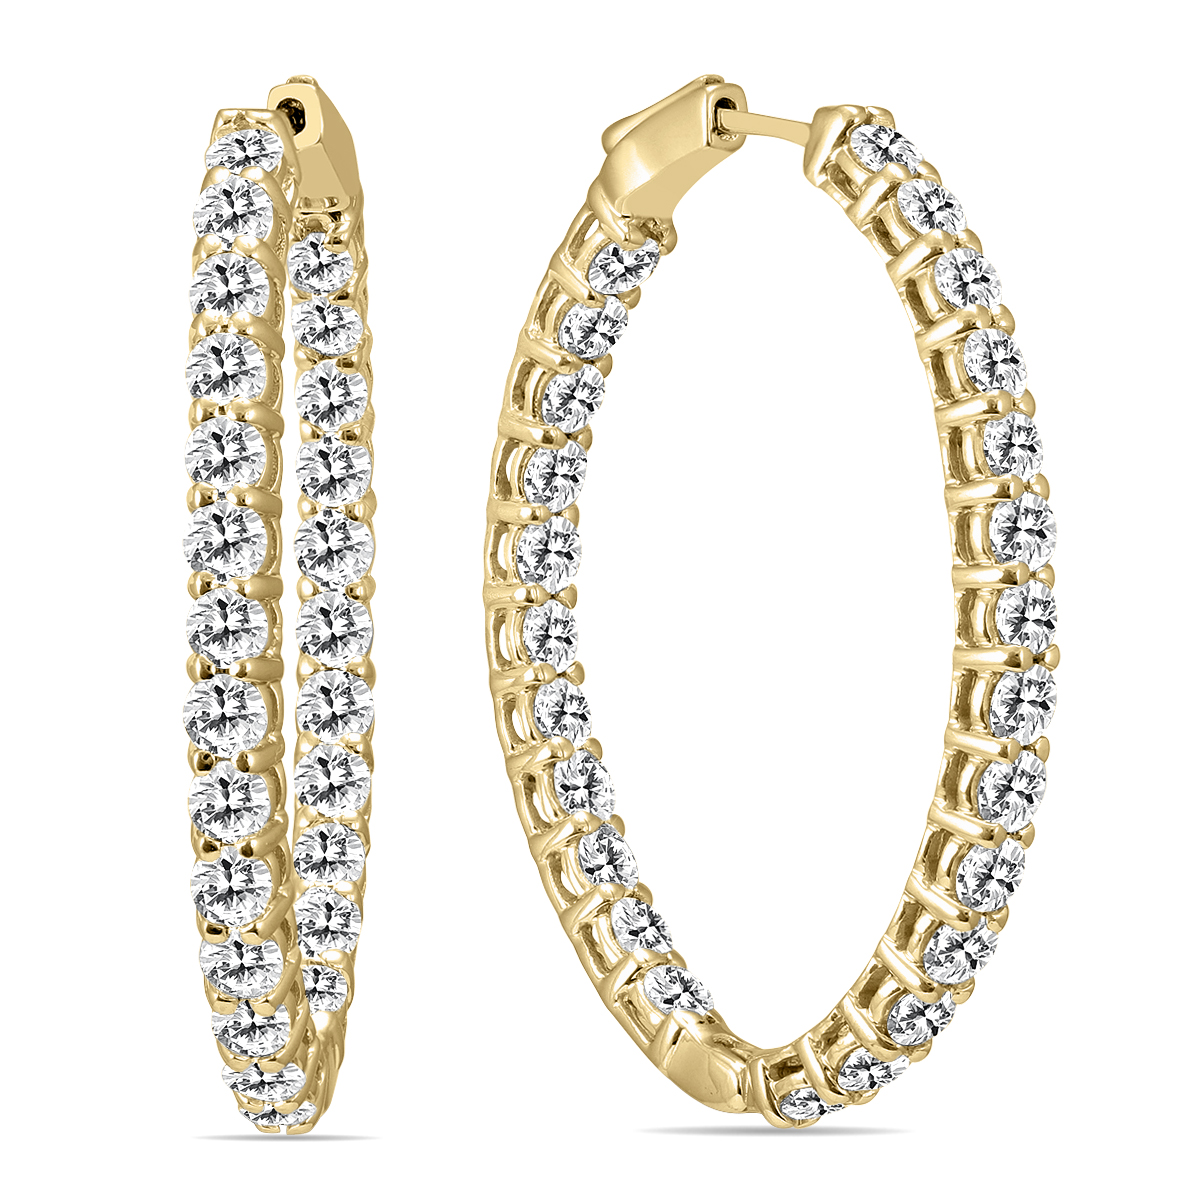 5 Carat TW Oval Diamond Hoop Earrings with Push Button Locks in 14K Yellow Gold